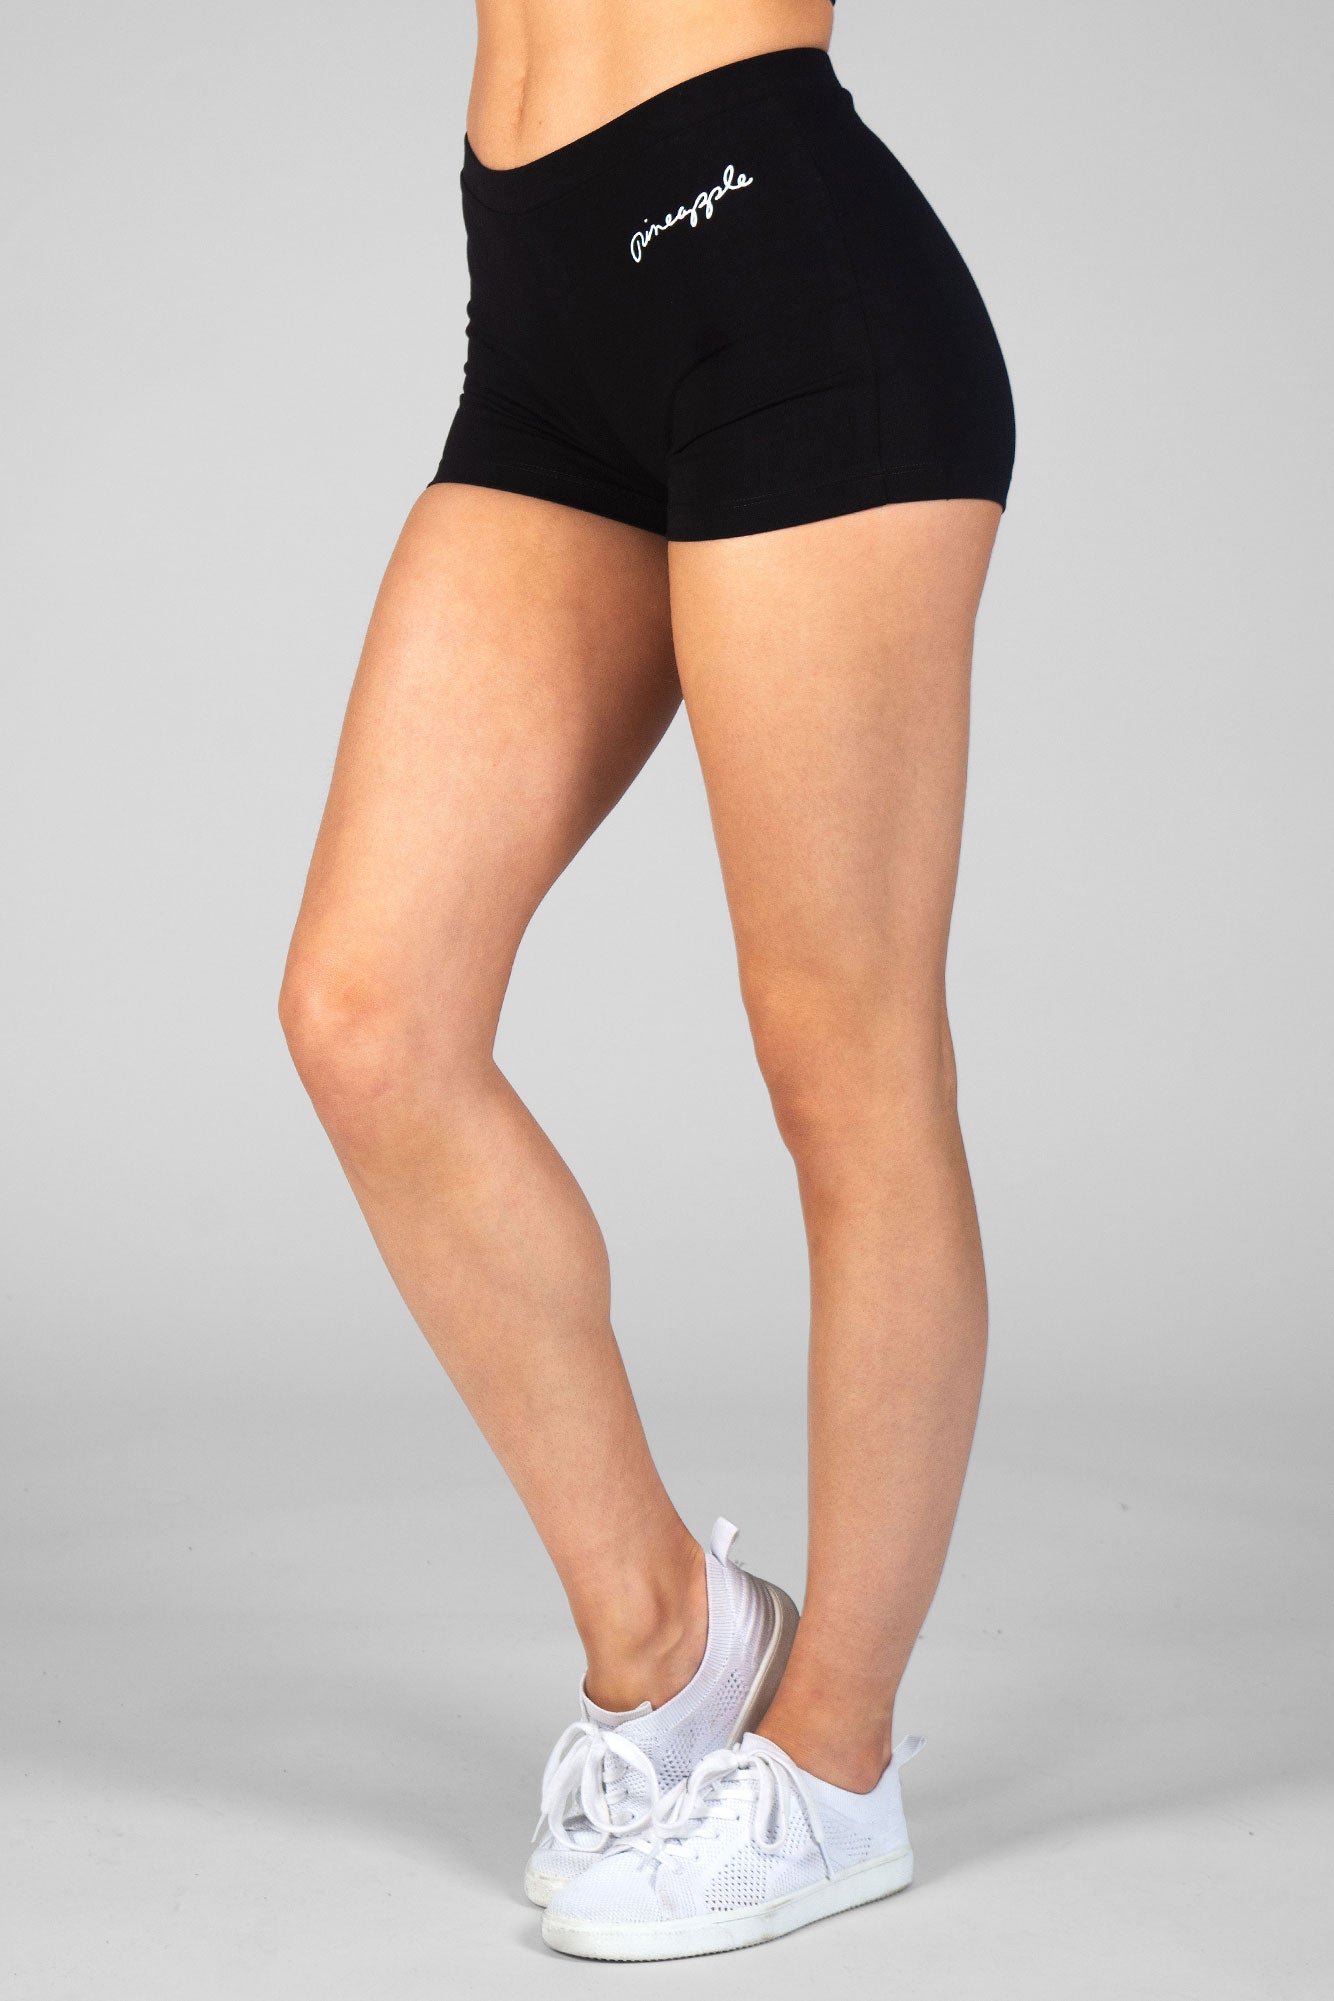 Shape Black High Waist Hotpants | Curve | PrettyLittleThing